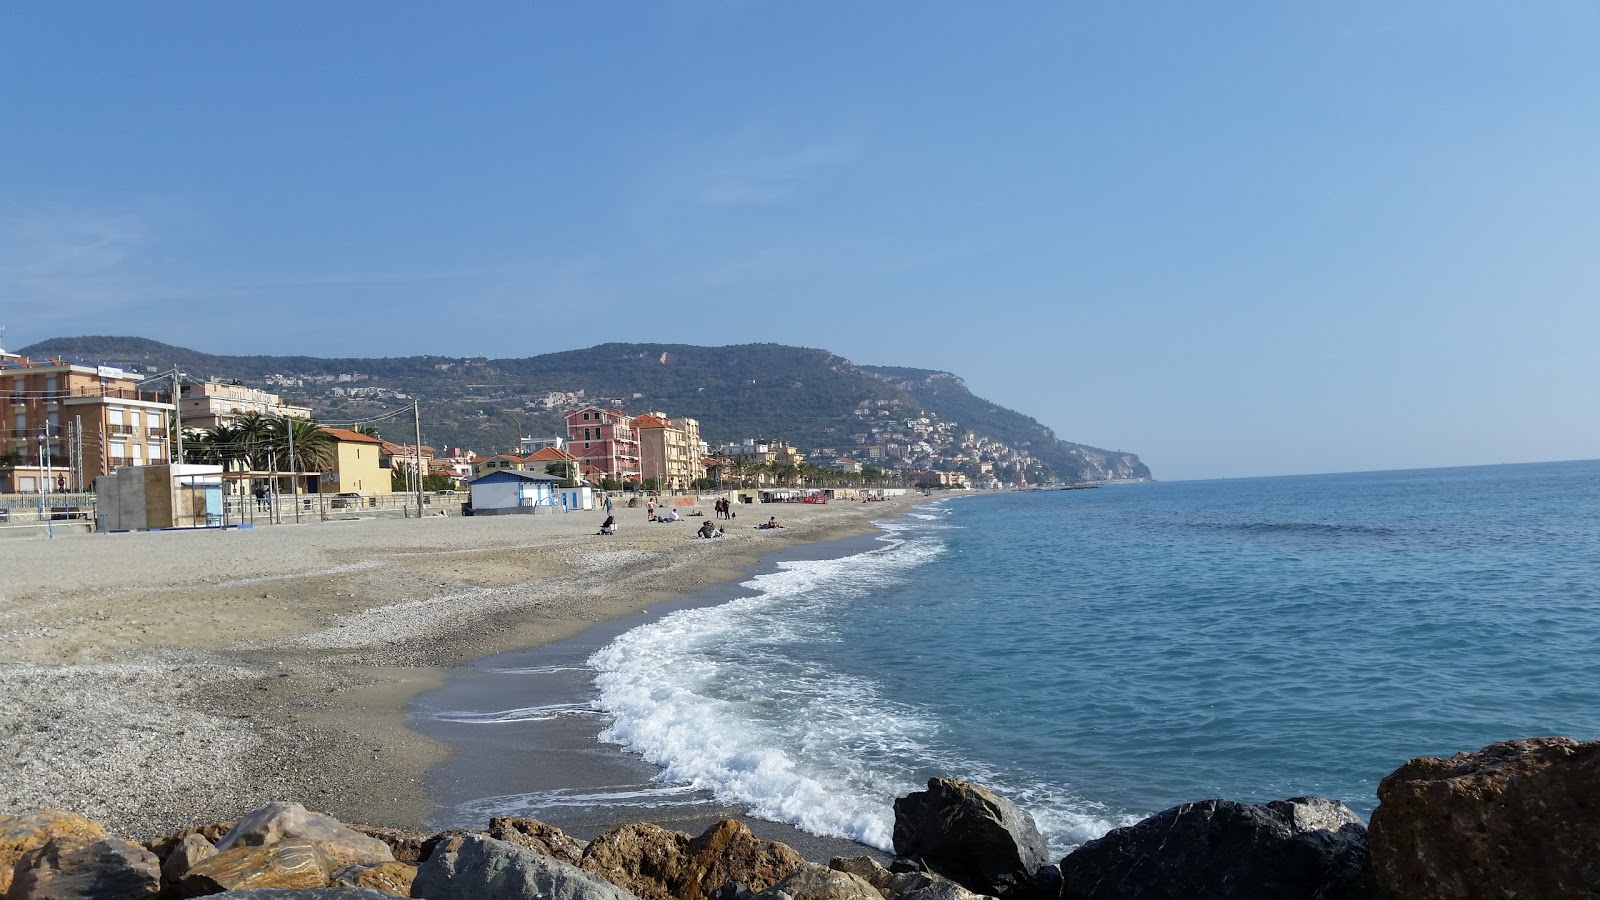 Spiaggia di Borgio'in fotoğrafı mavi saf su yüzey ile